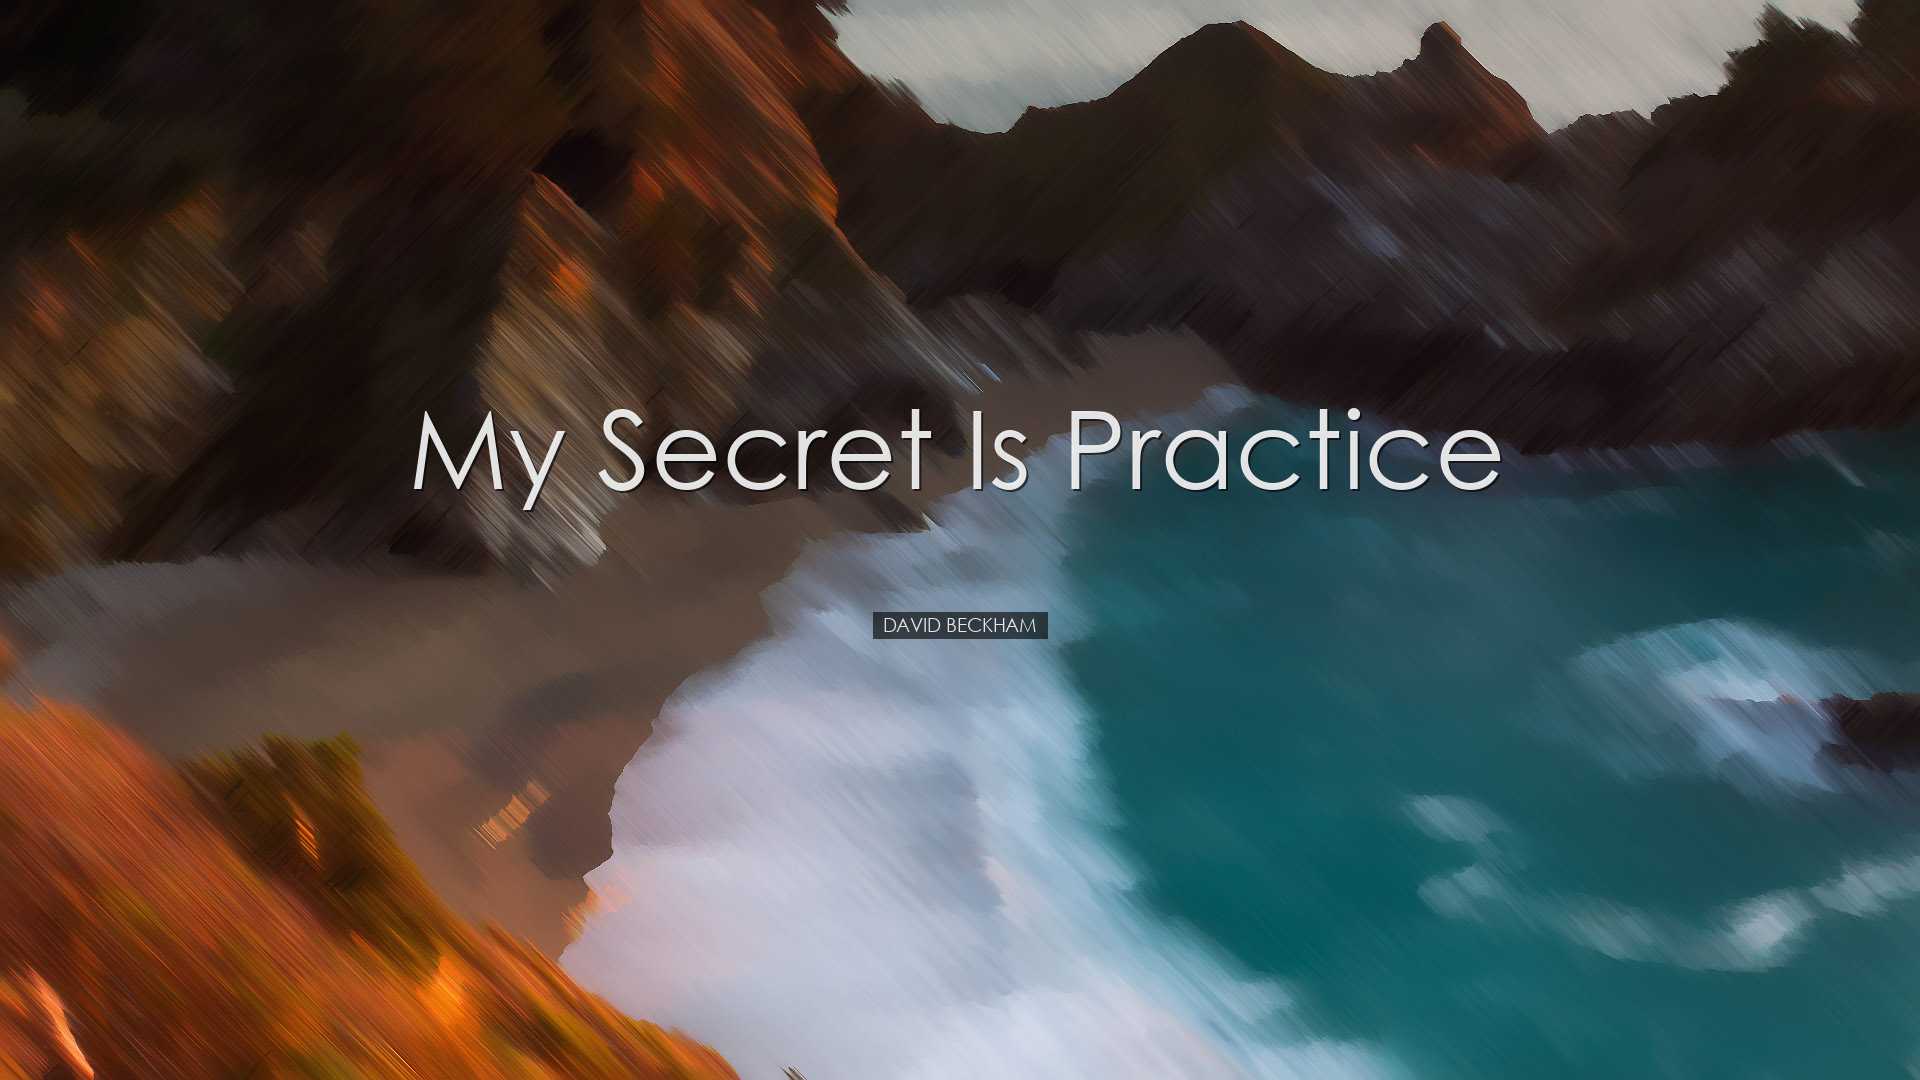 My secret is practice - David Beckham